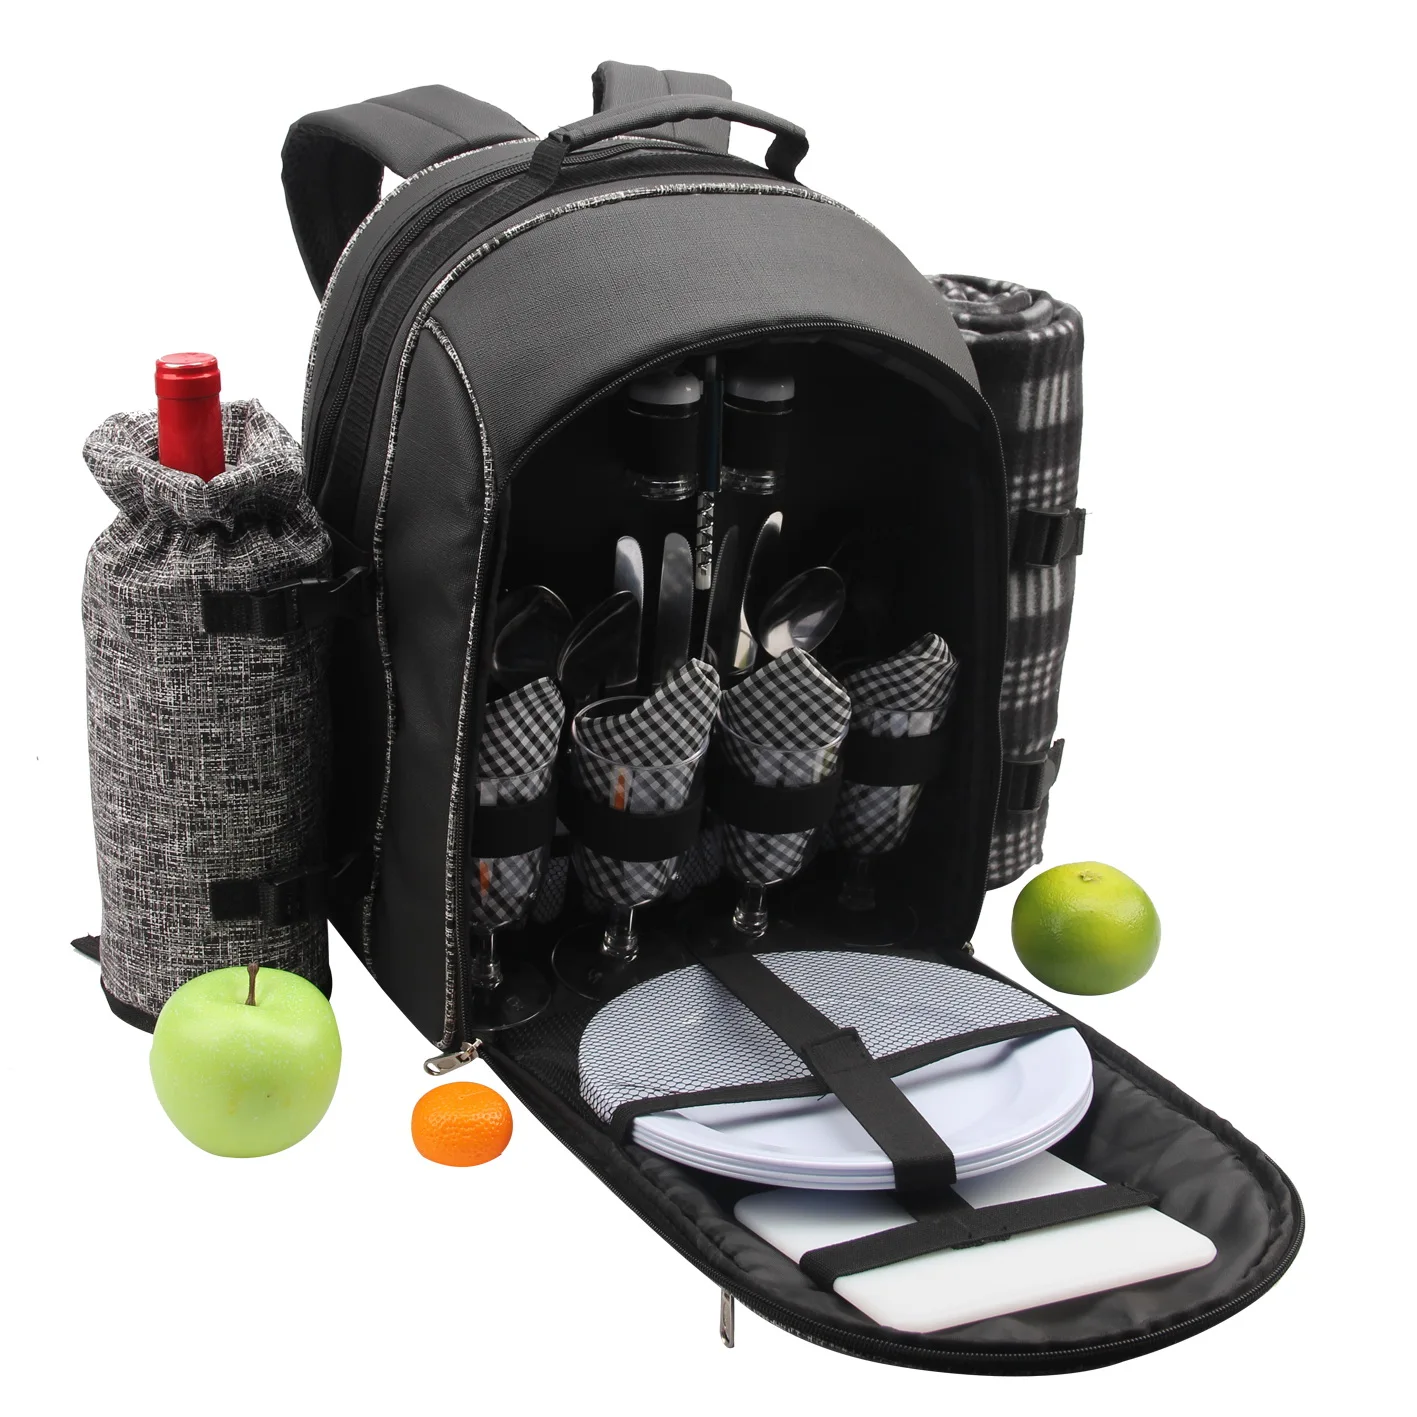 
Picnic backpacks JLD-1158 